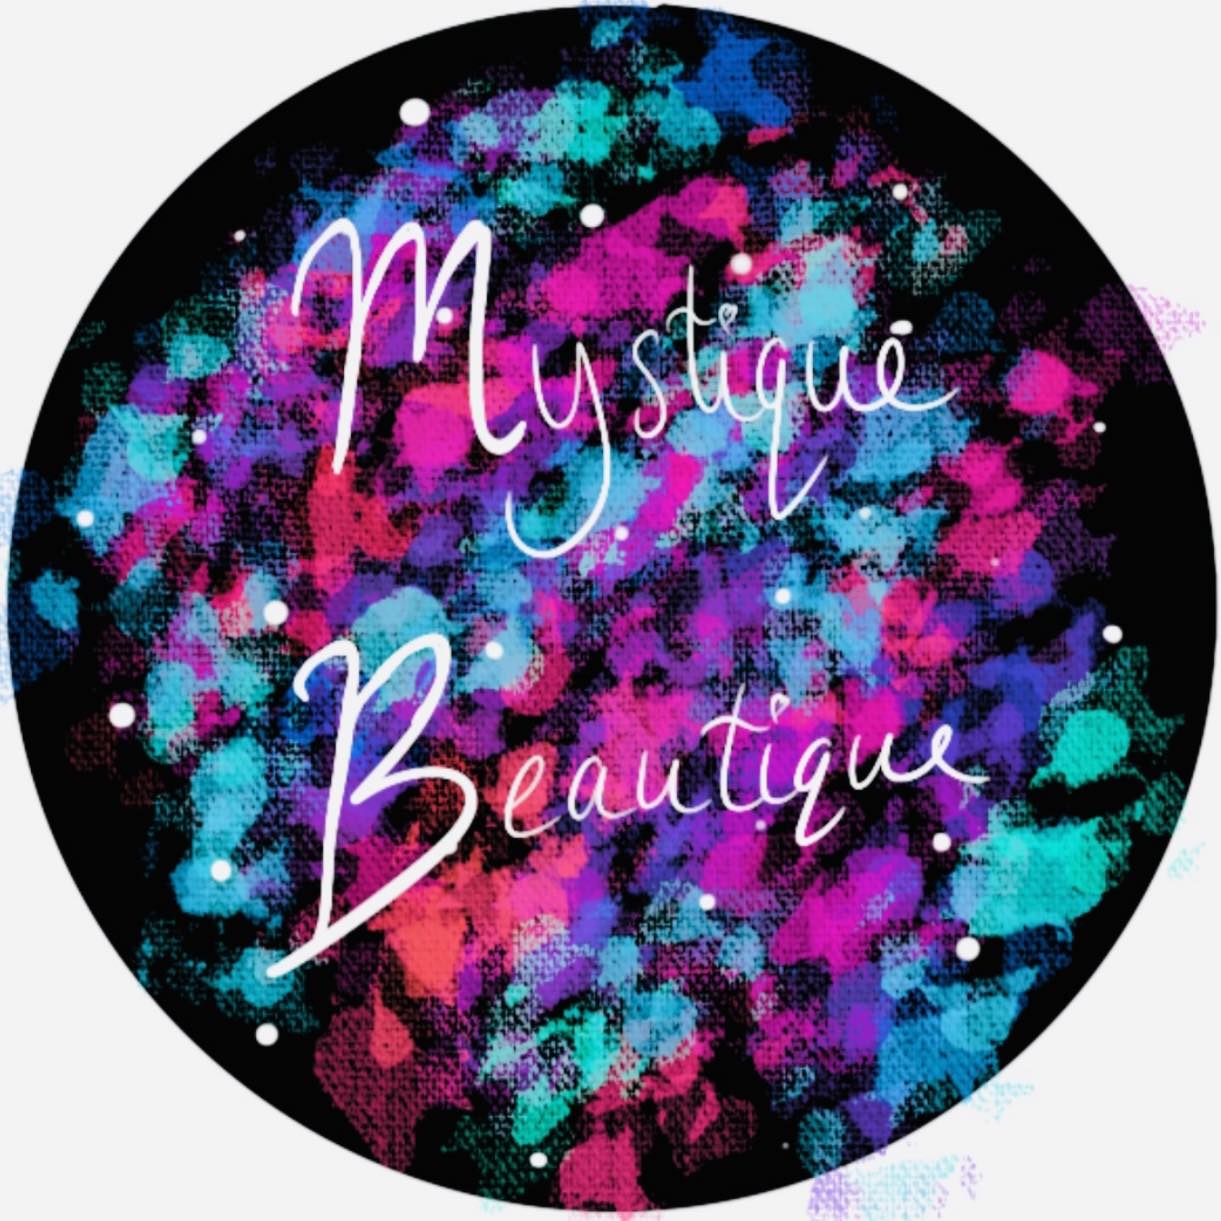 Mystique Beautique - Special FX and Glam looks